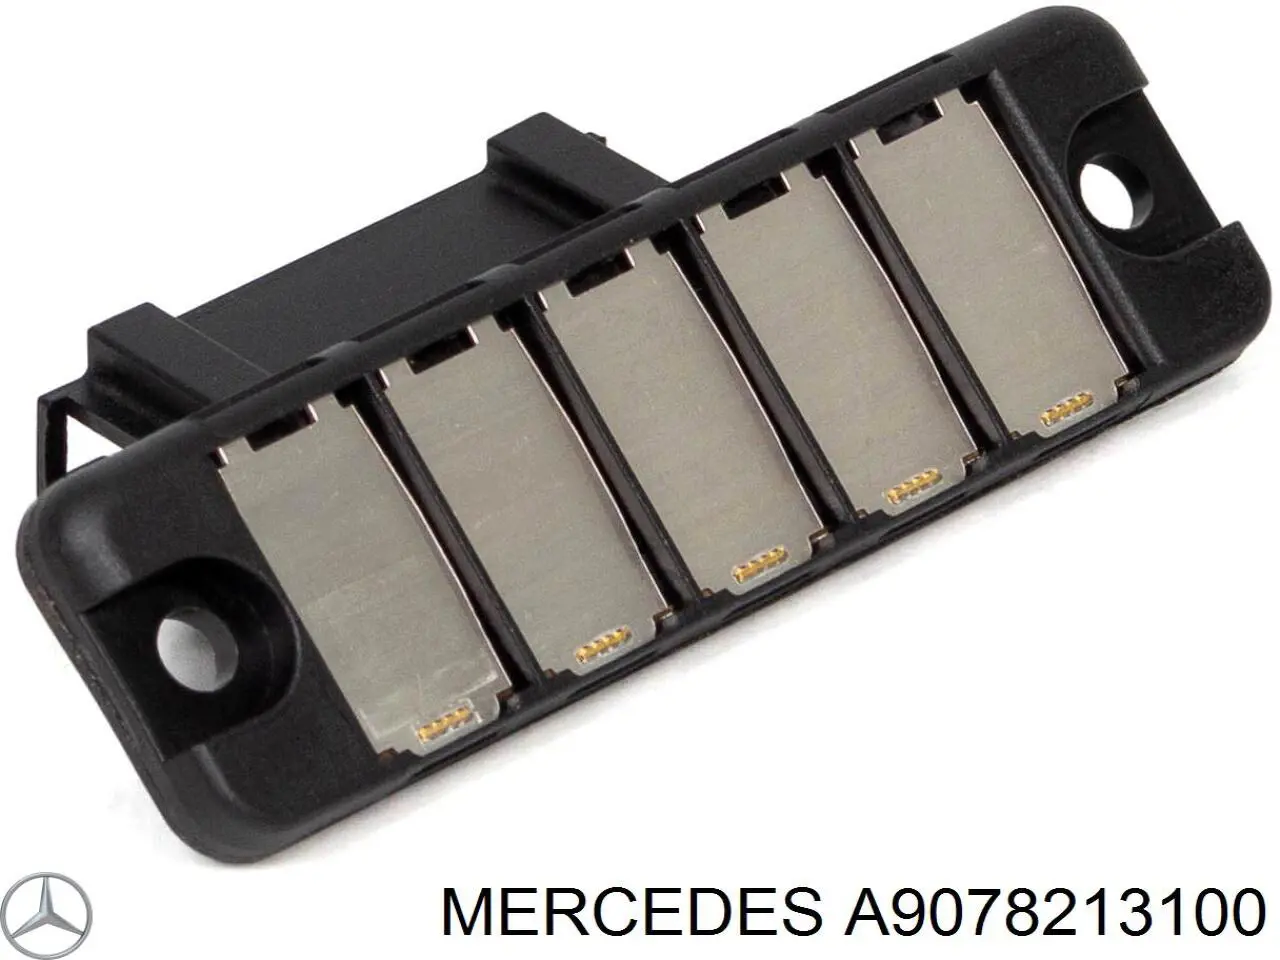 Sensor, Interruptor de contacto eléctrico para puerta corrediza, en carrocería para Mercedes Vito (639)